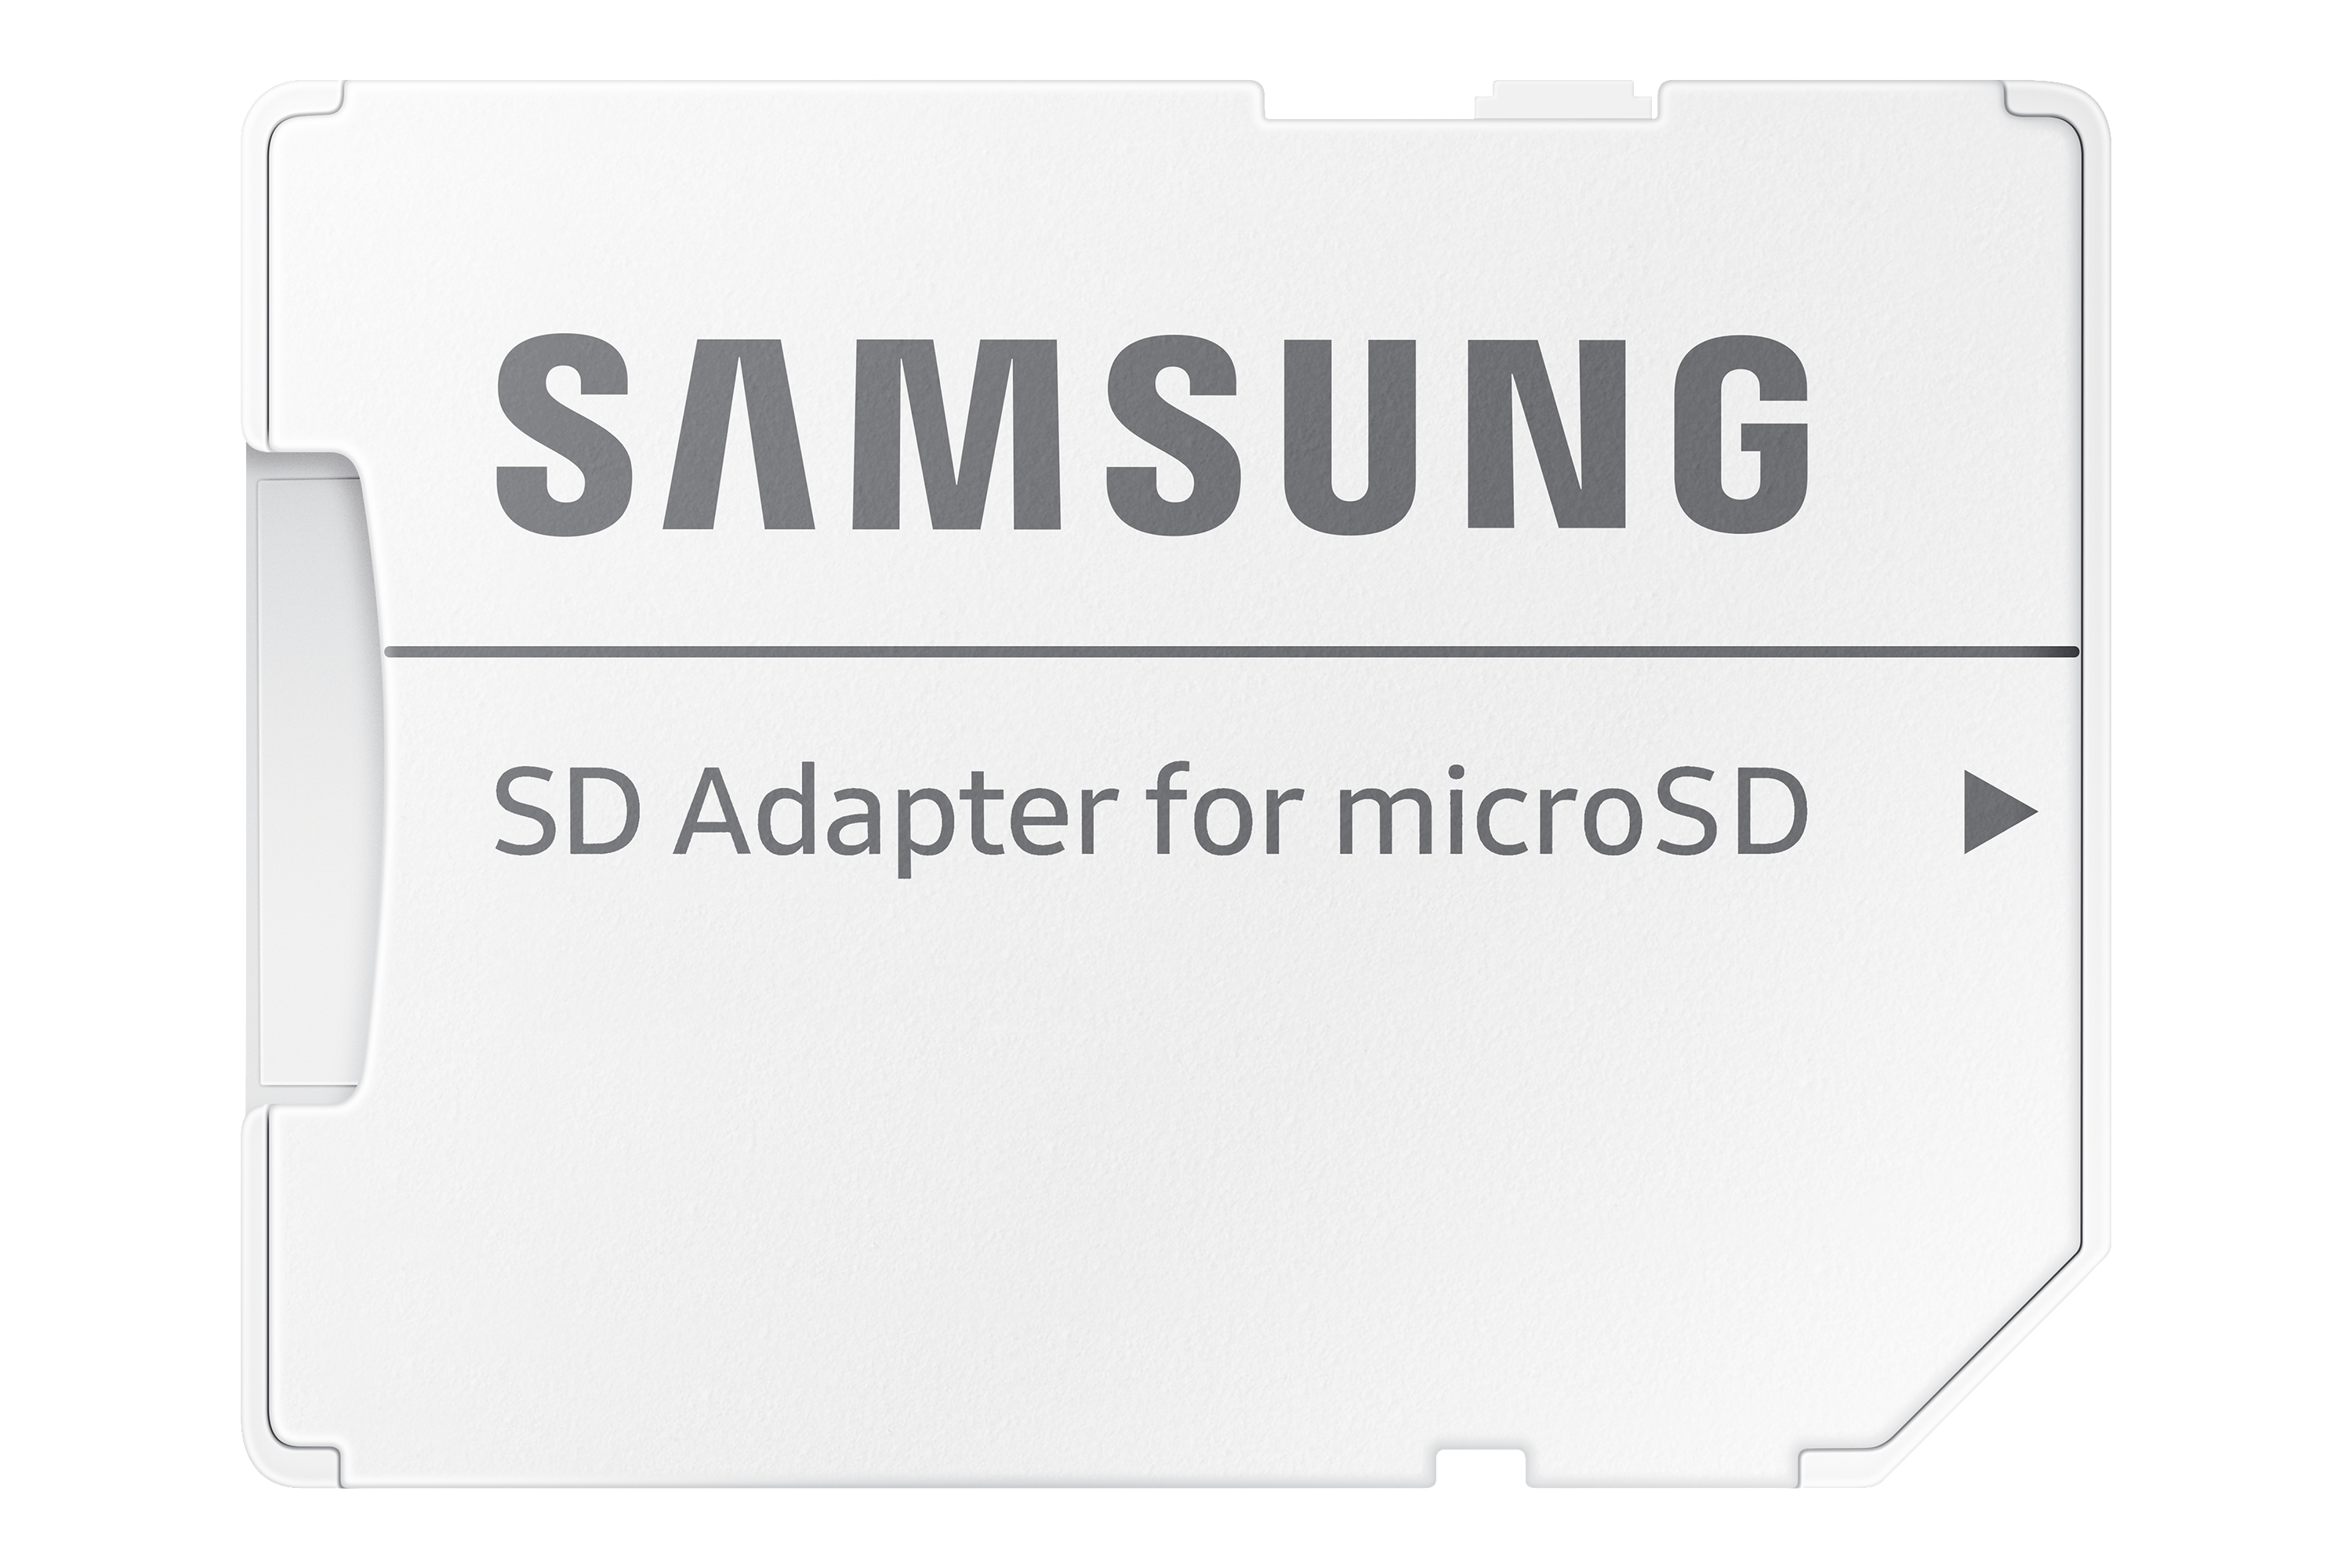 SAMSUNG PRO Ultimate, Micro-SD MB/s 200 GB, Speicherkarte, 512